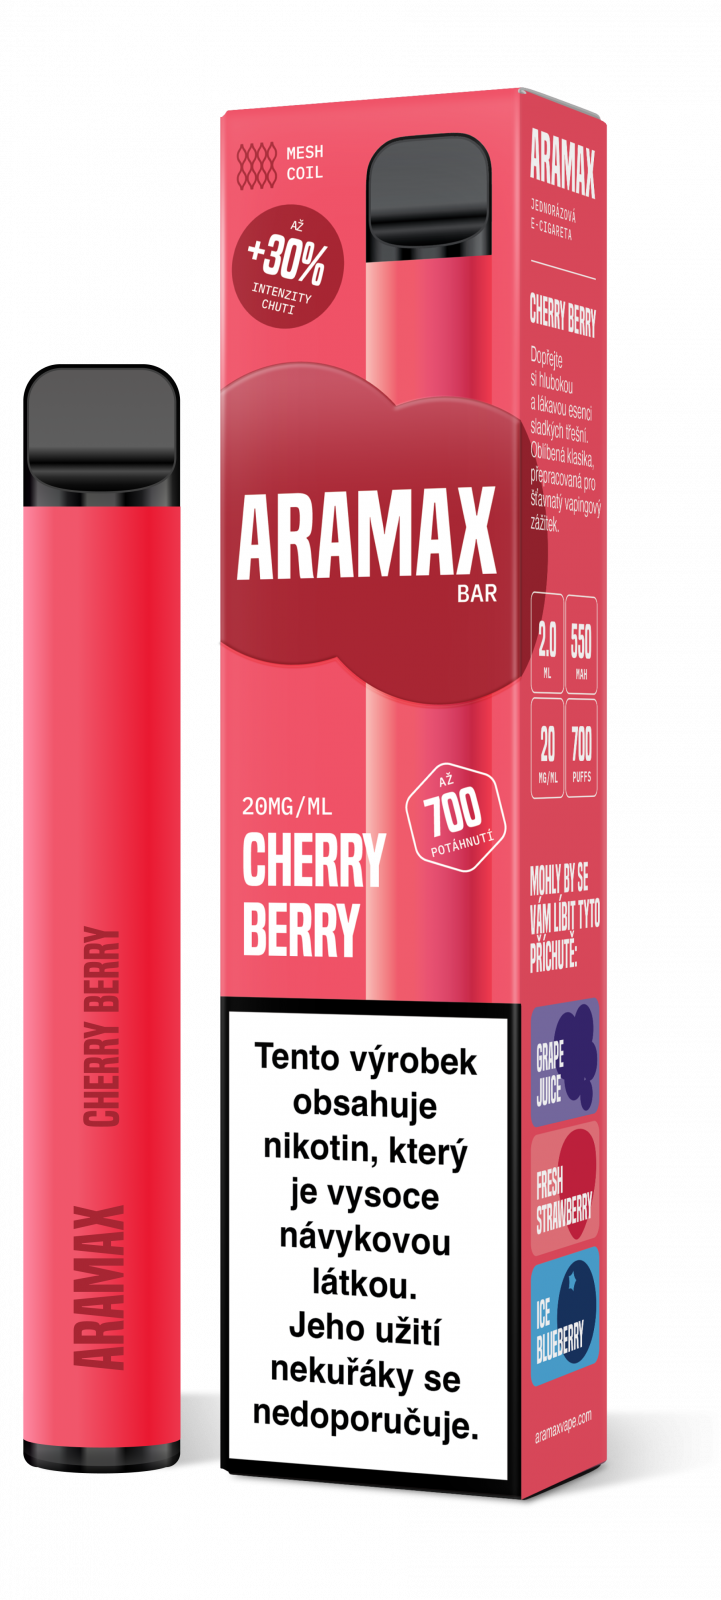 CHERRY BERRY 20mg/ml - Aramax Bar 700 - jednorázová e-cigareta